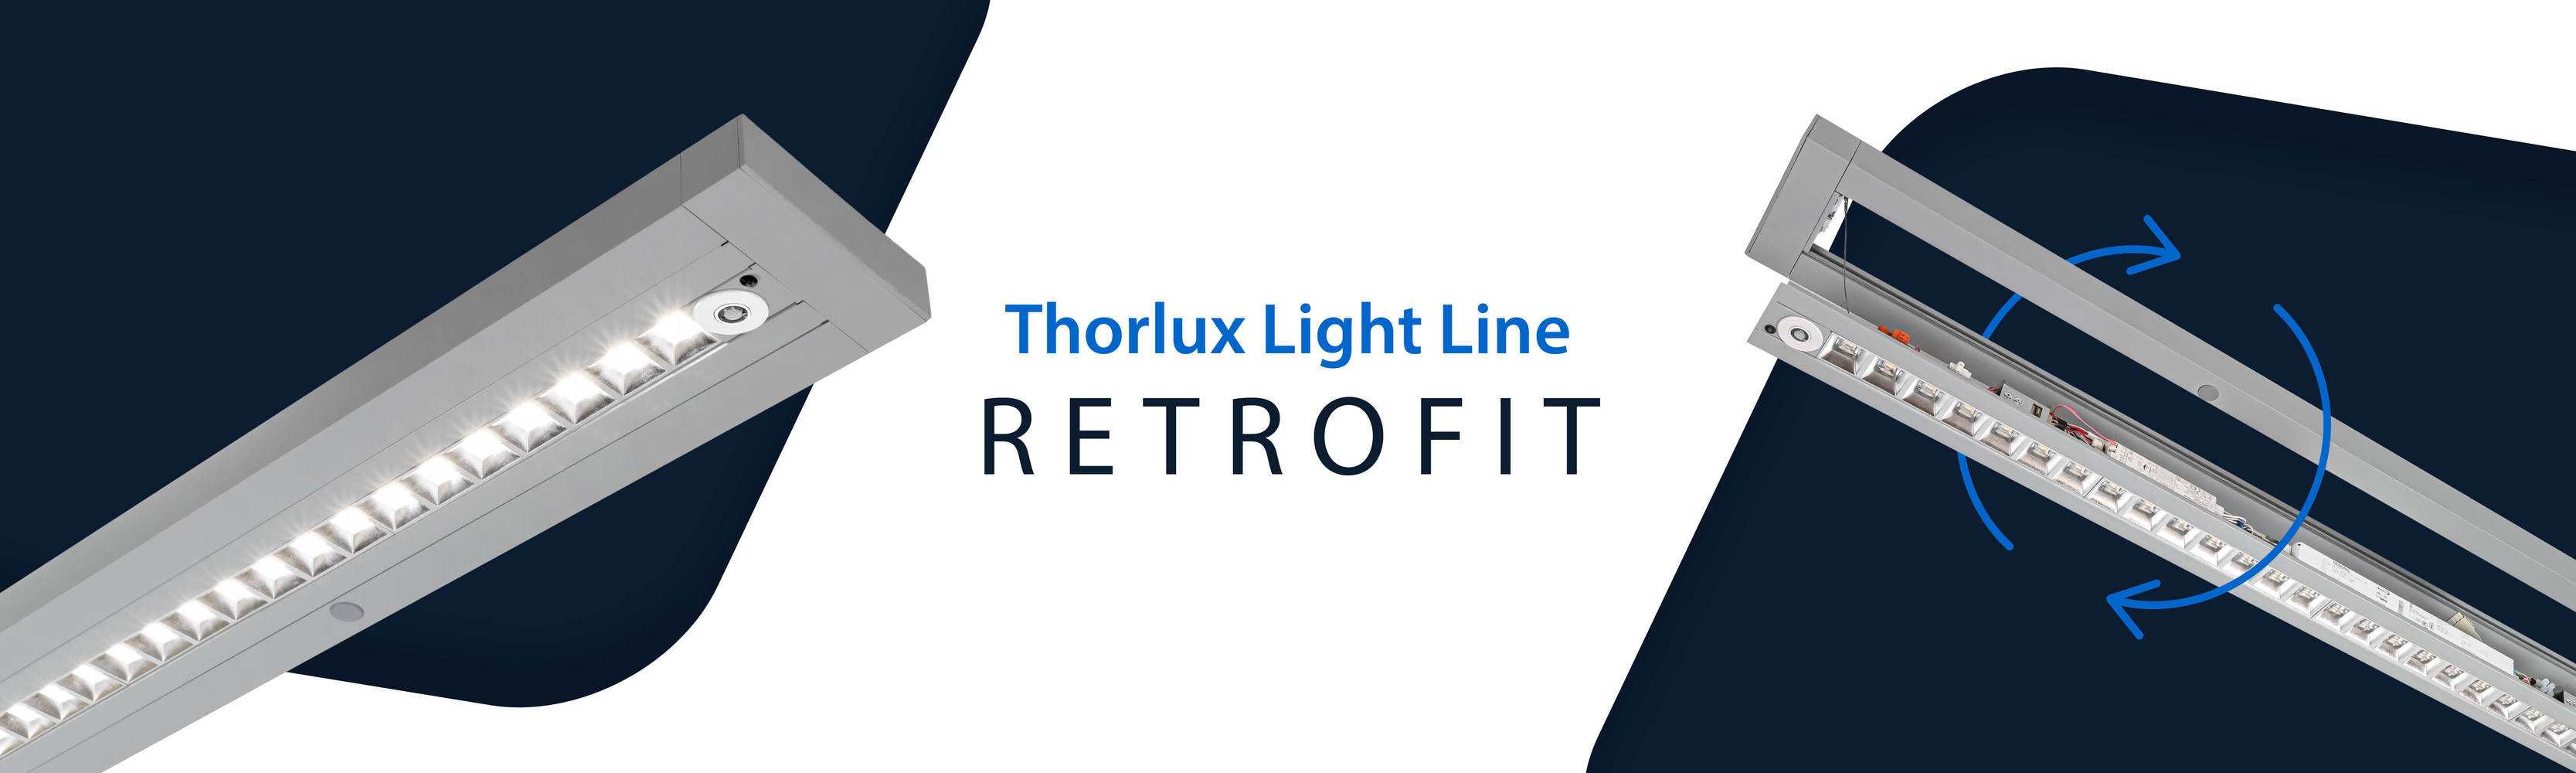 Thorlux Light Line Retrofit - A sustainable upgrade for fluorescent Thorlux Light Line